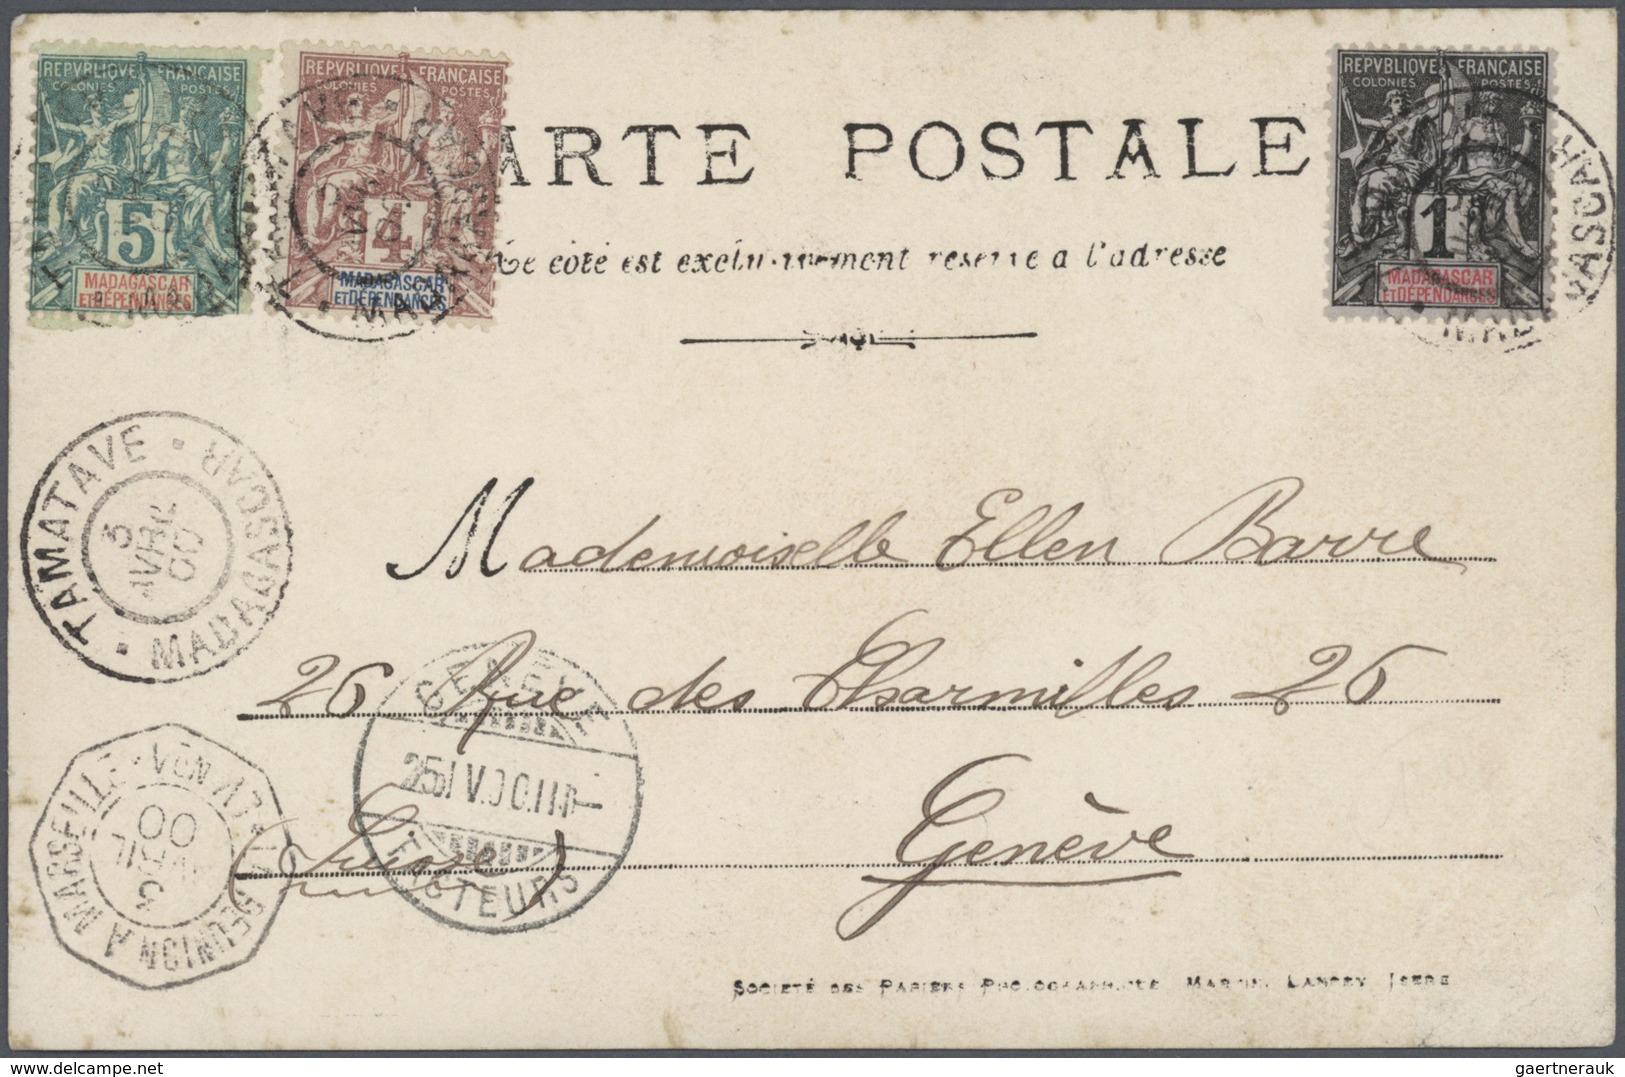 Madagaskar: 1889/1910 (ca.), Madagascar/Dependencies, comprehensive collection in a binder, comprisi